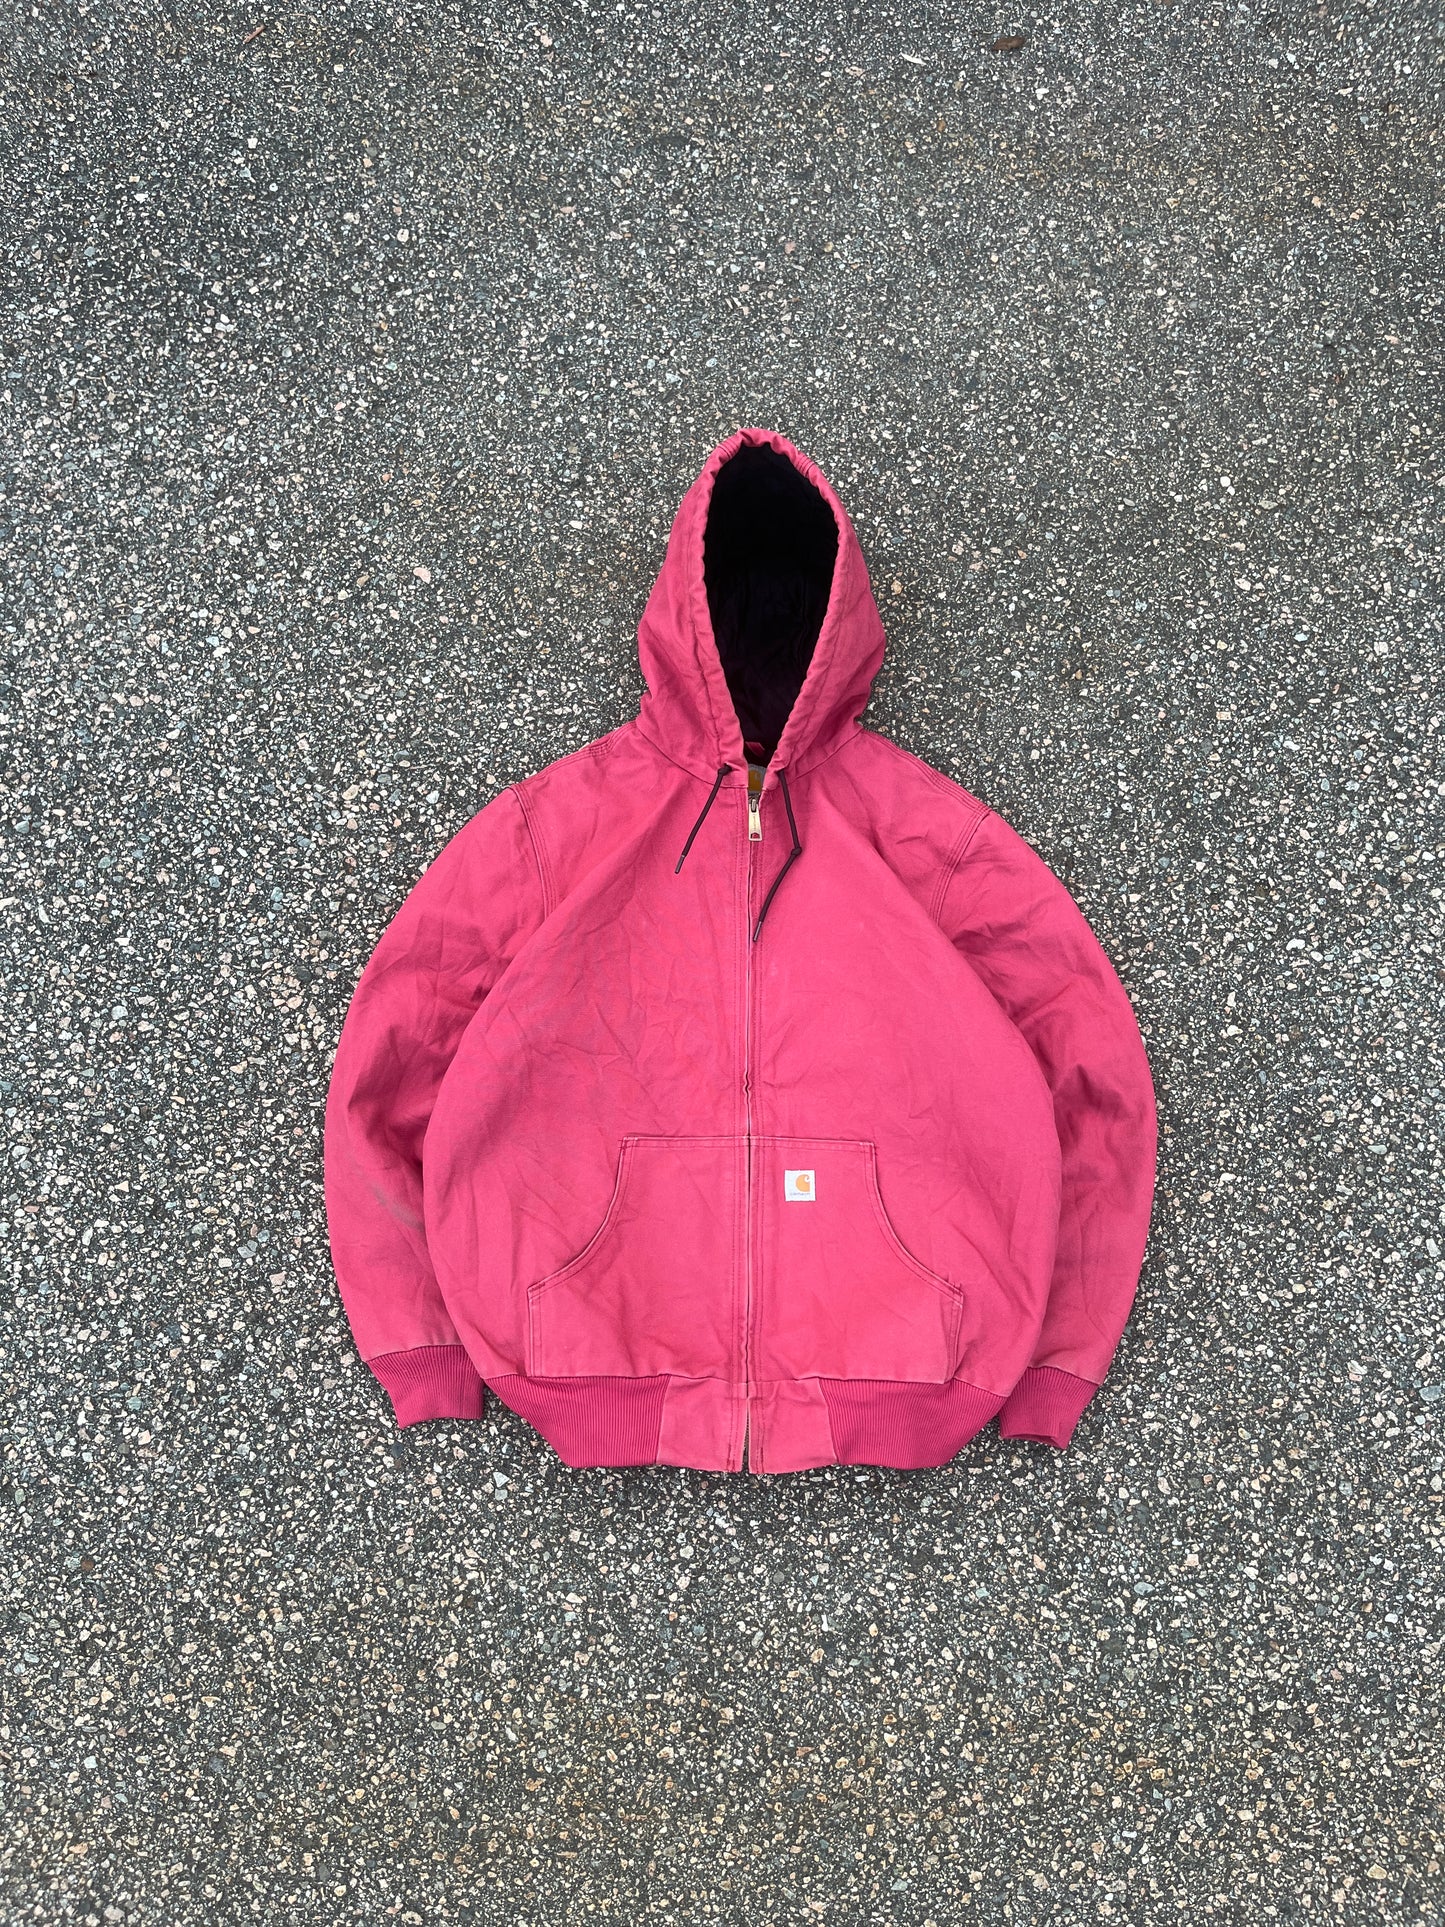 Faded Pink Carhartt Active Jacket - Medium